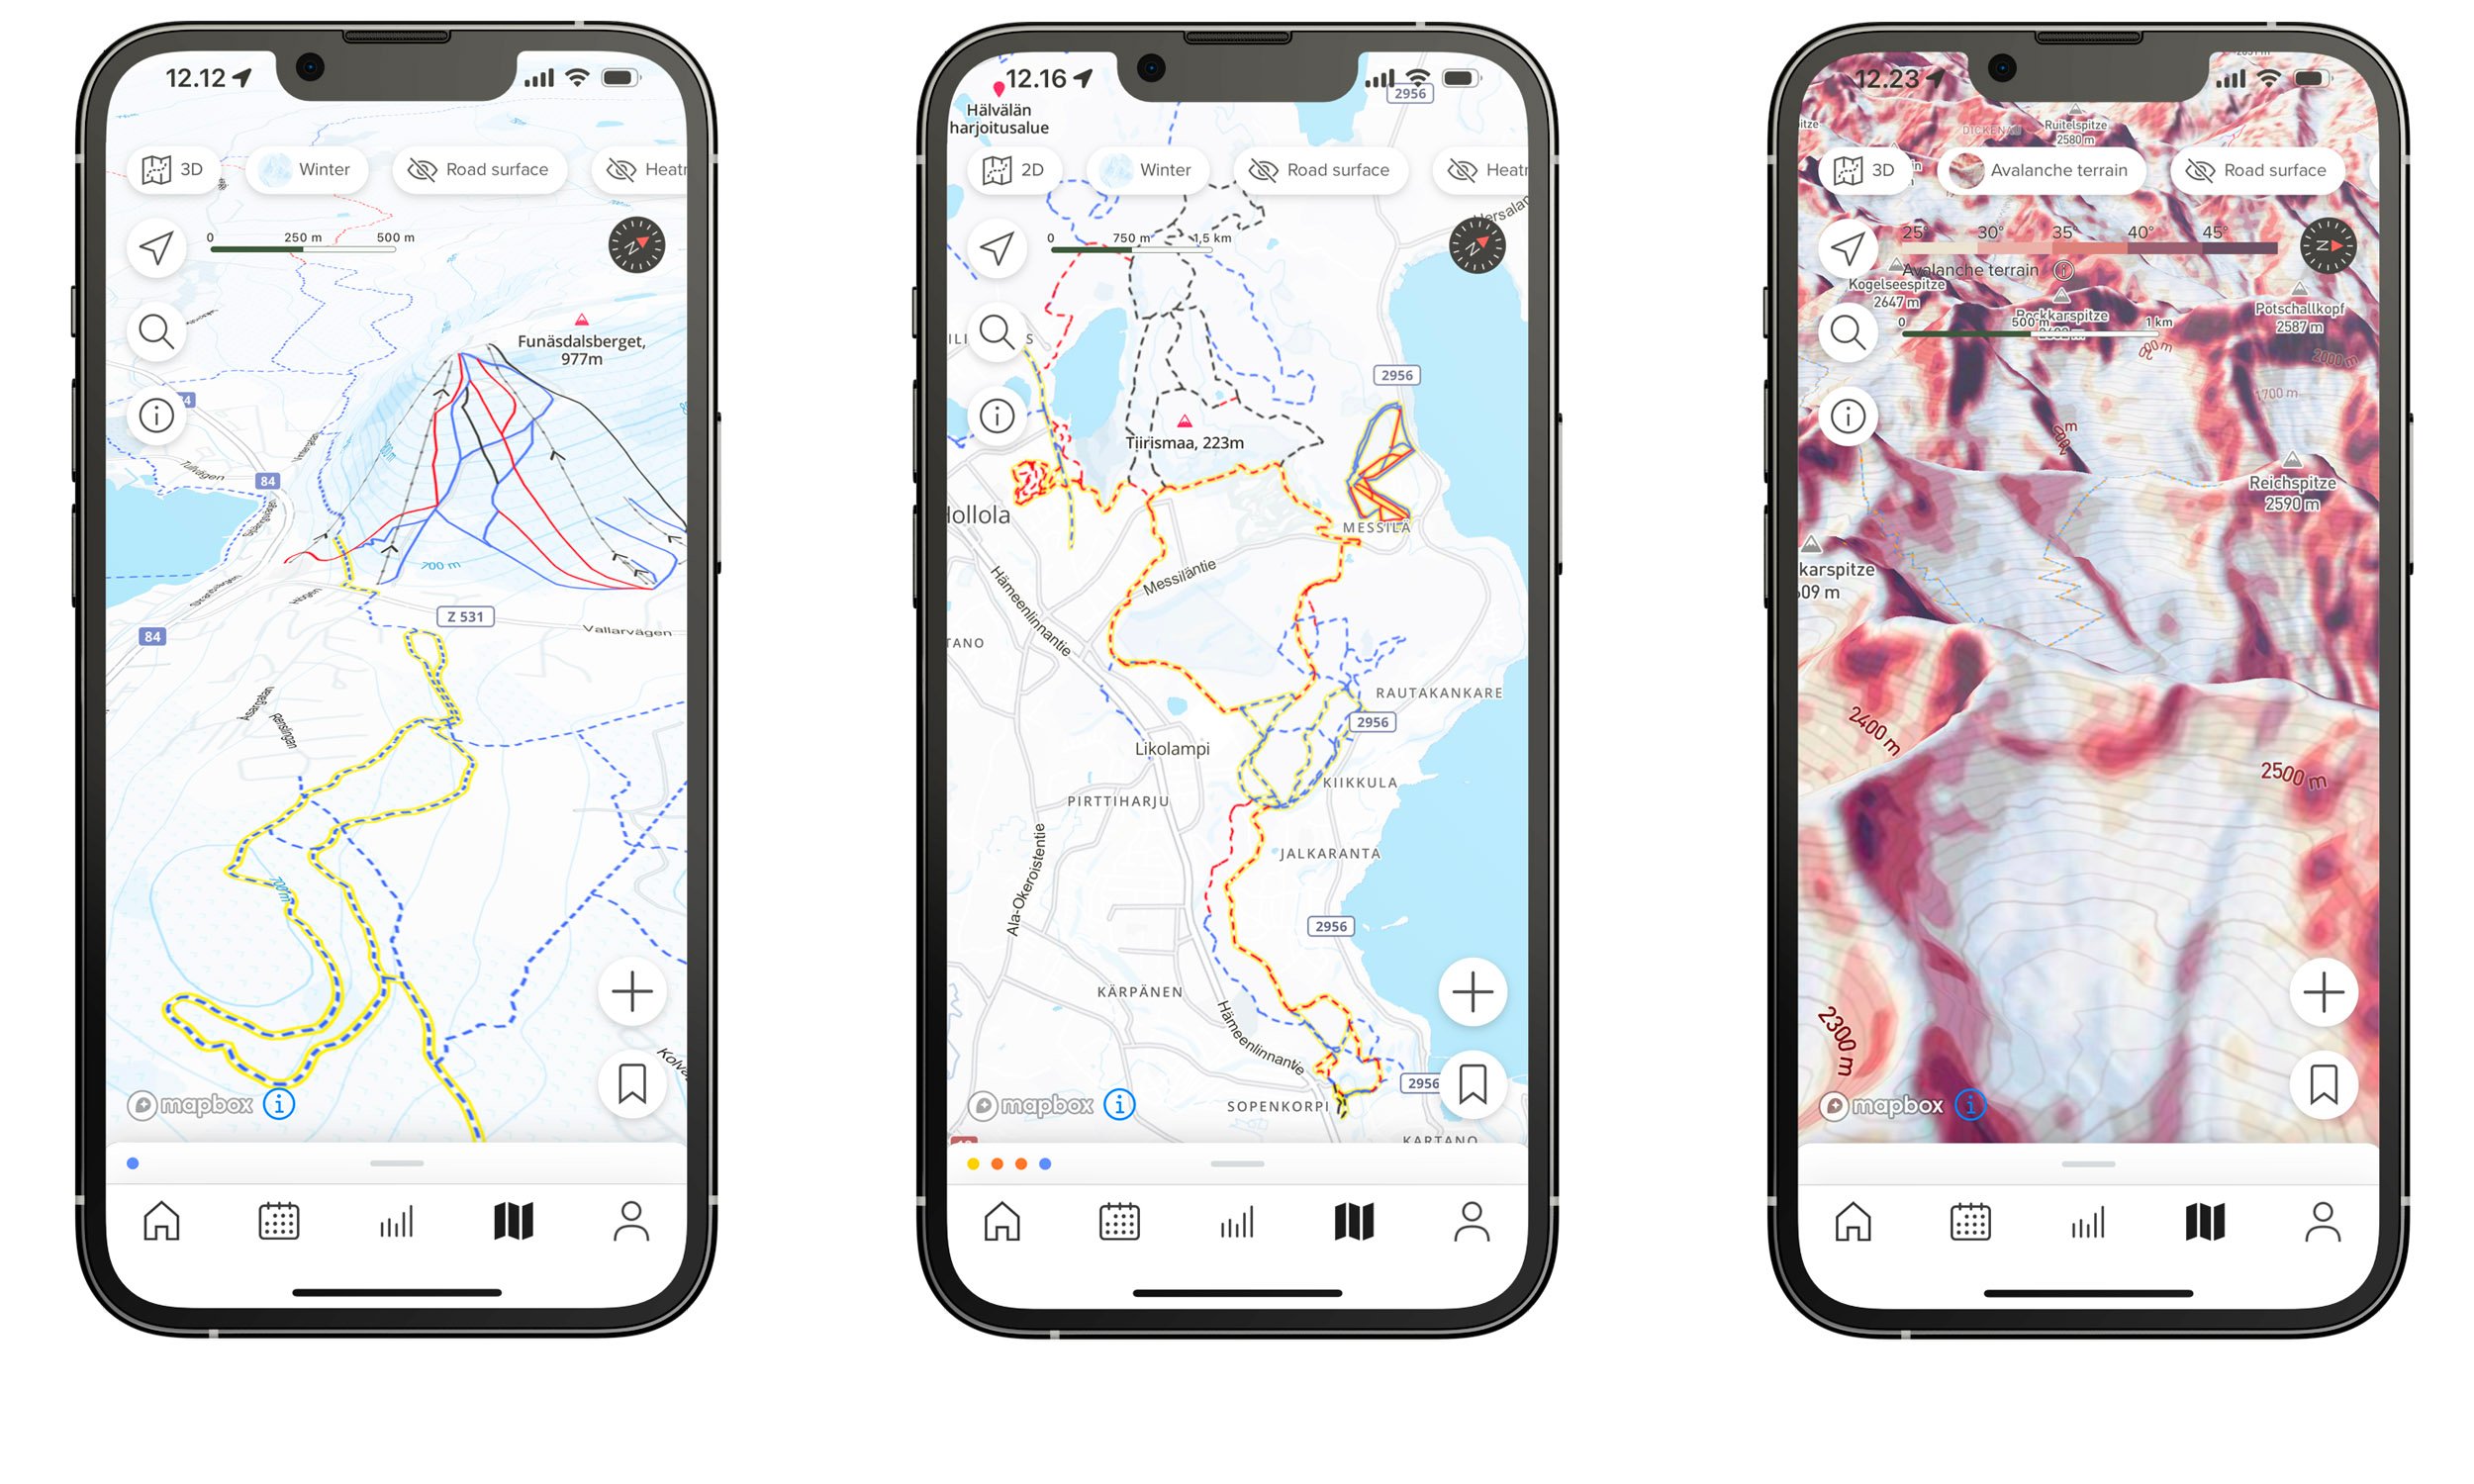 The new Winter map layer in Suunto app